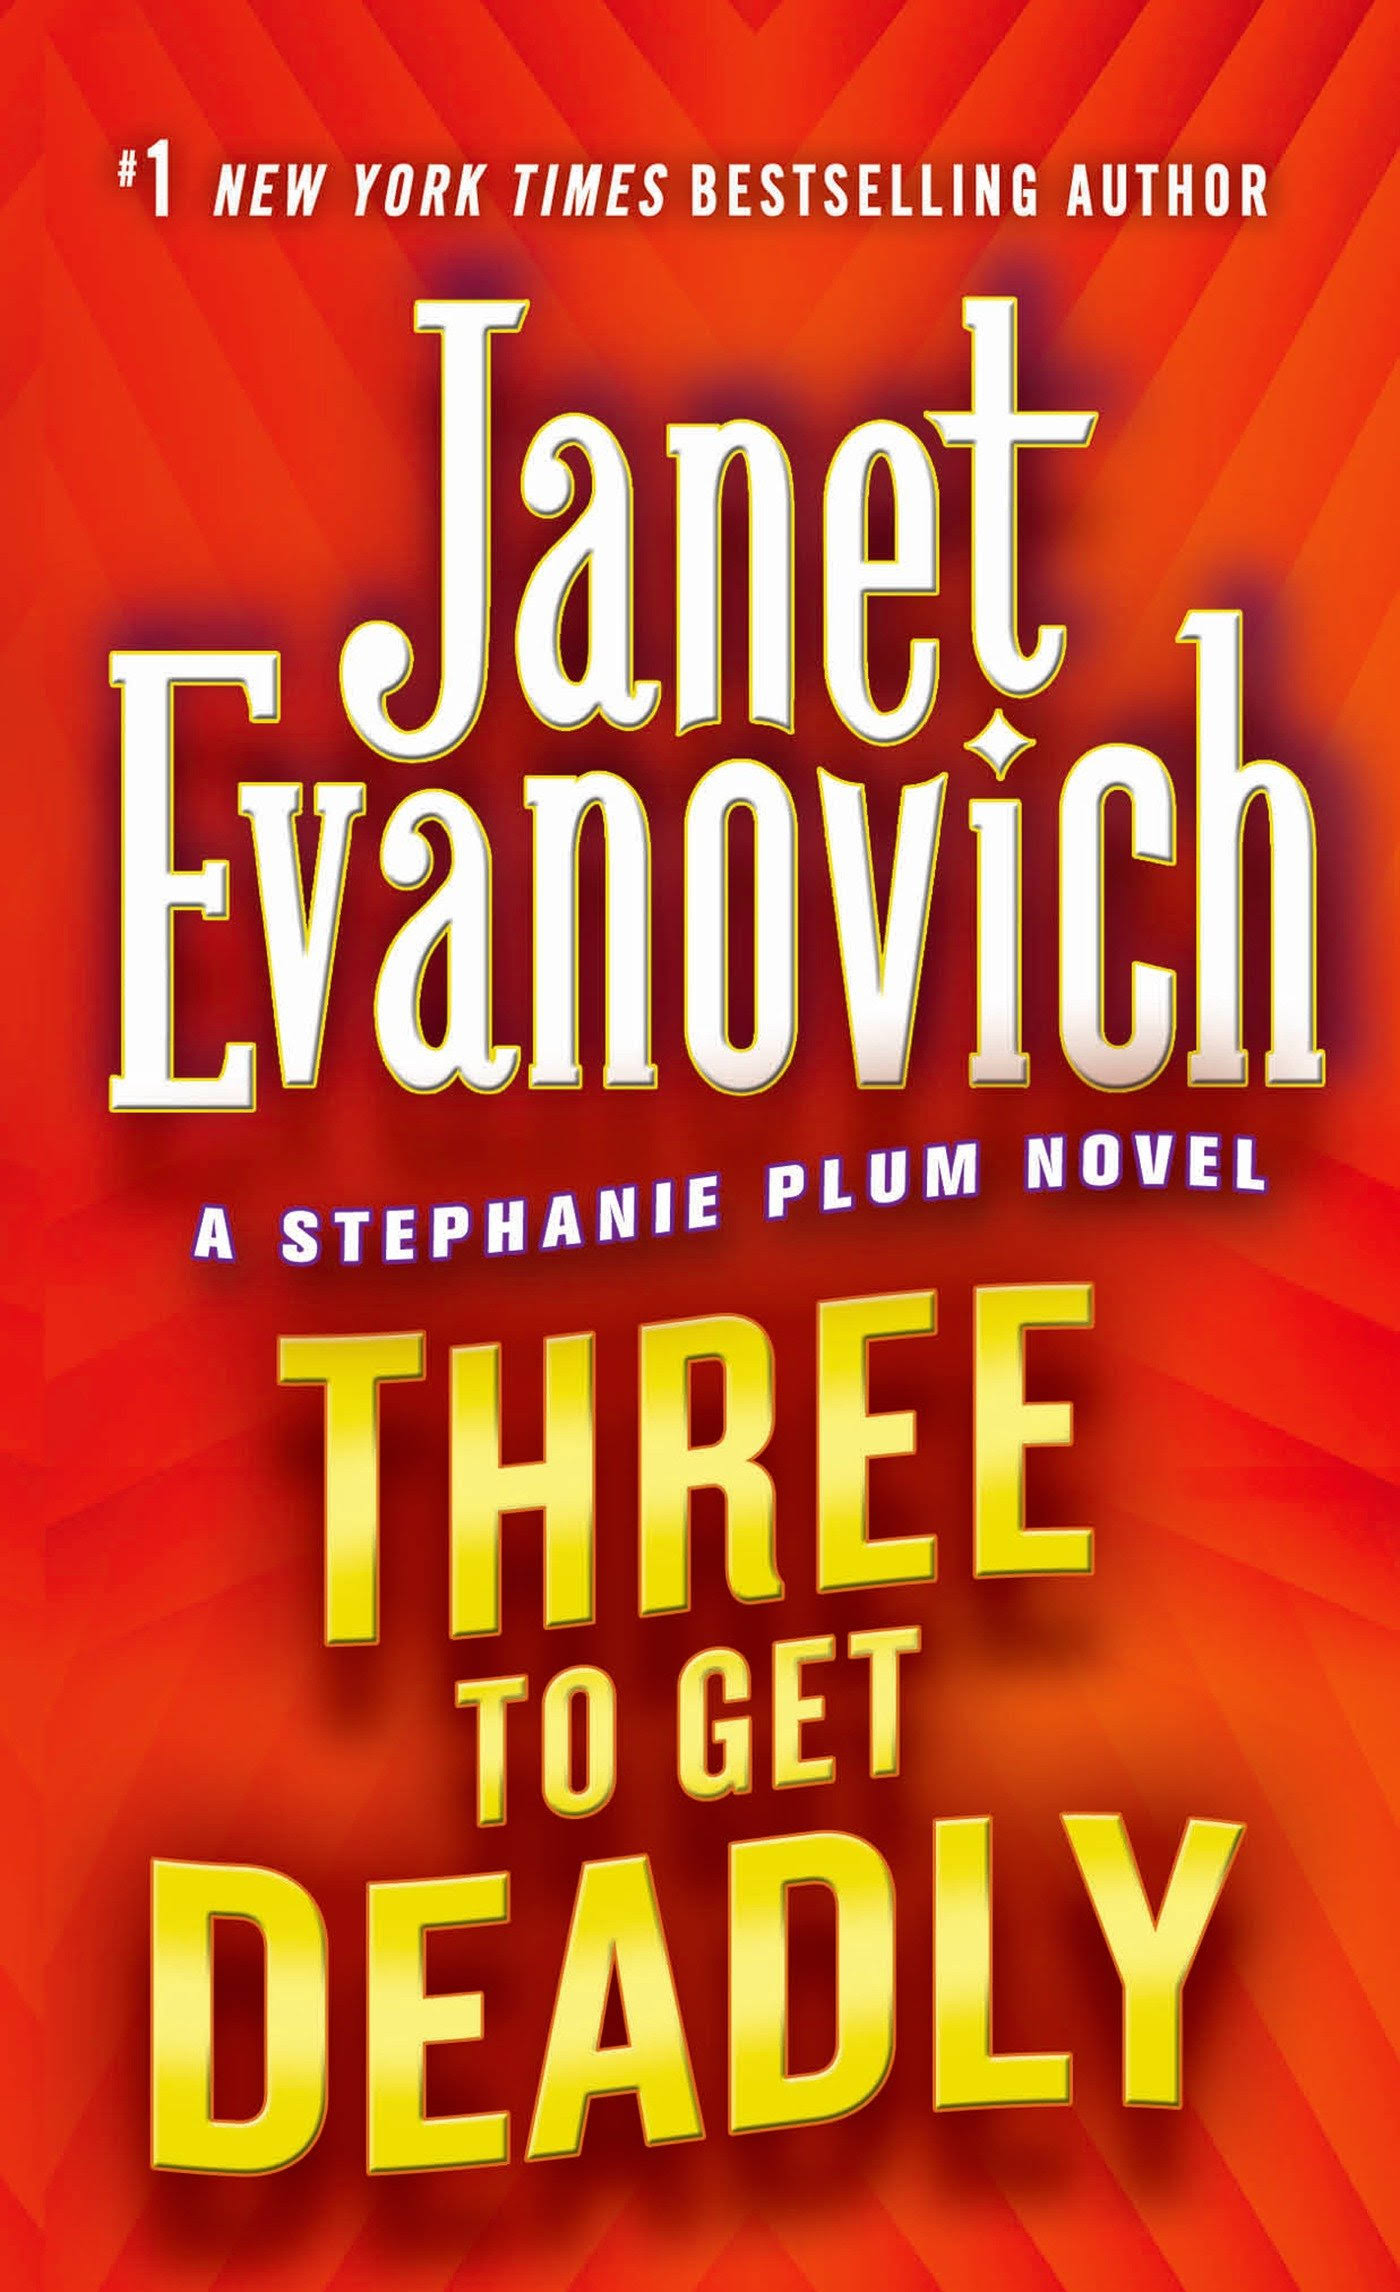 Three To Get Deadly: A Stephanie Plum Novel [Book]